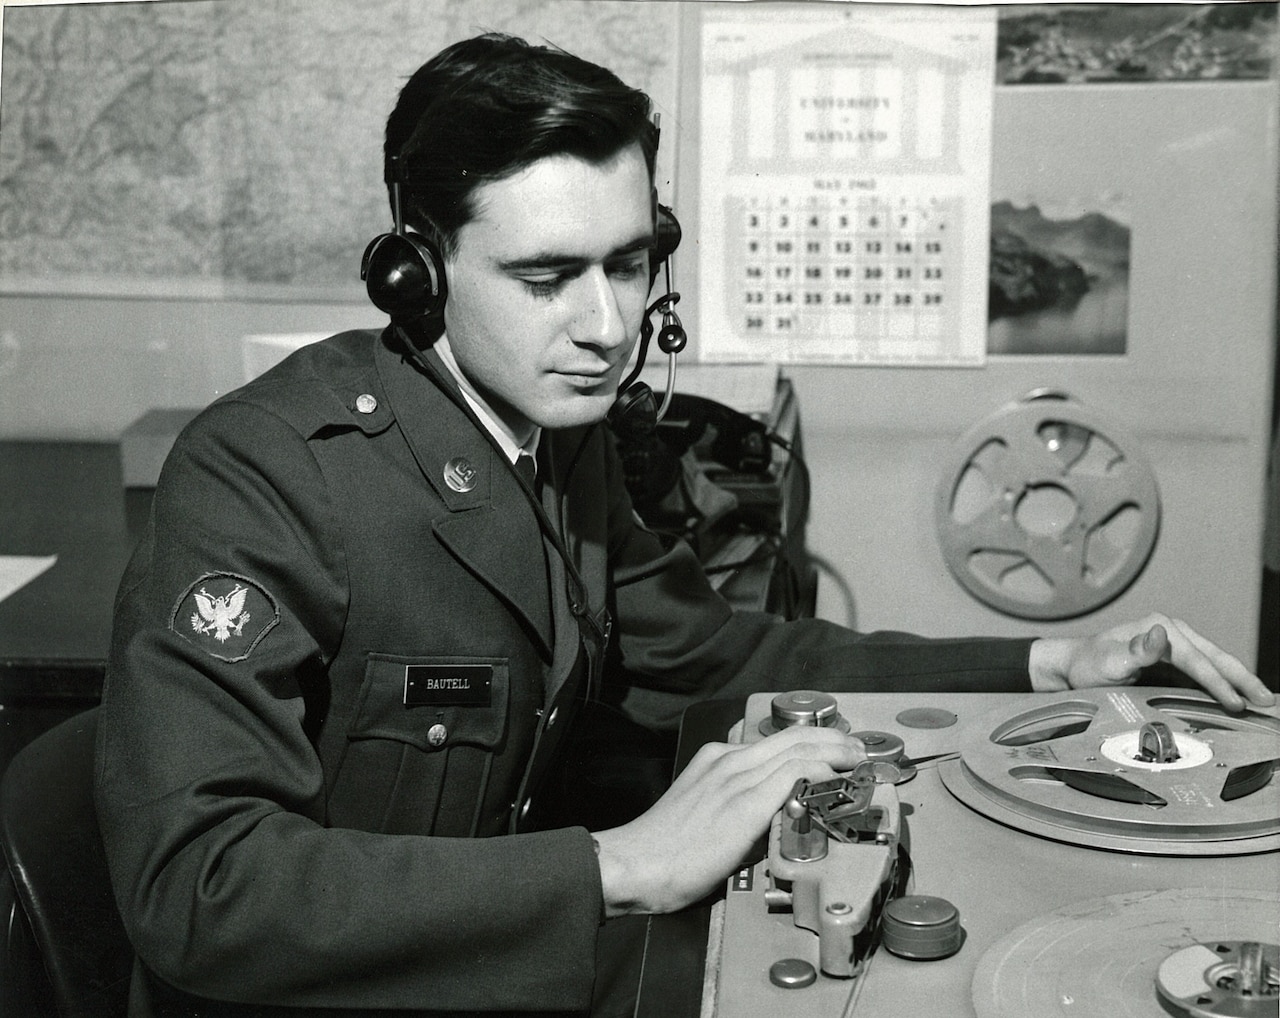 A uniformed man in headphones touches DJ equipment in a radio studio.